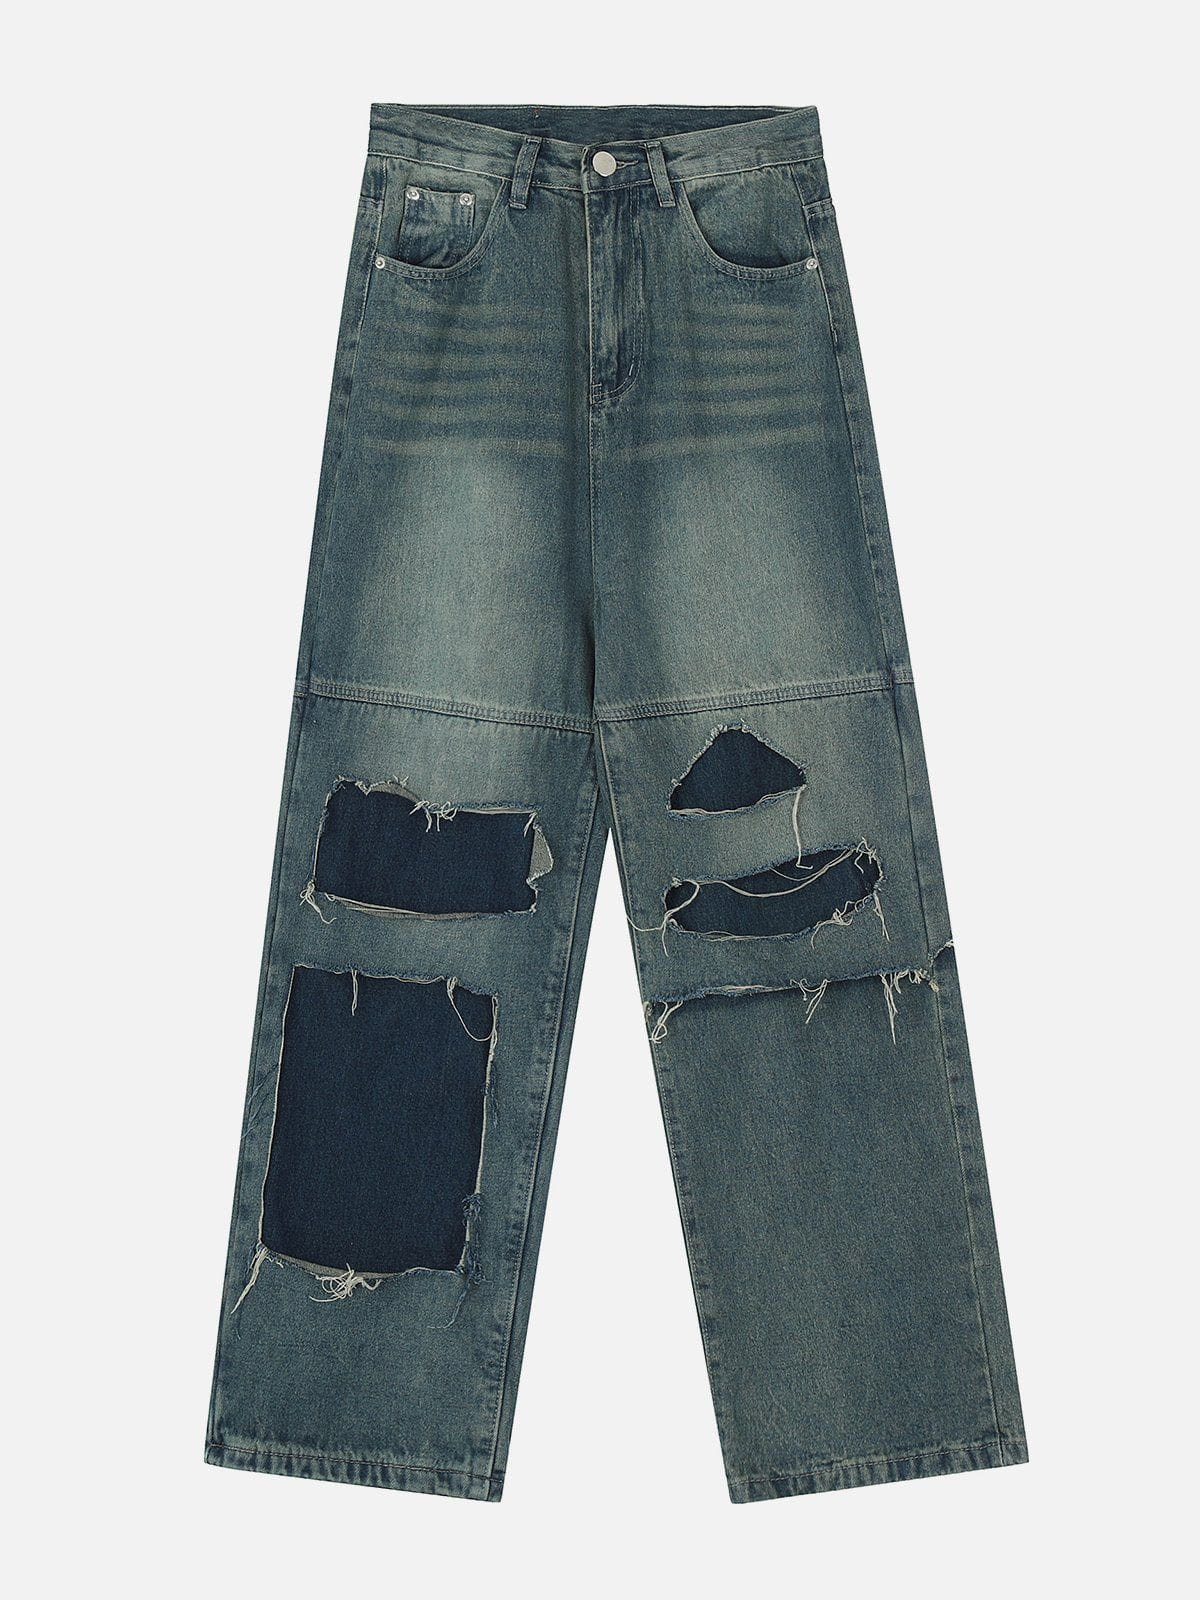 Majesda® - Distressed Fringe Jeans outfit ideas streetwear fashion